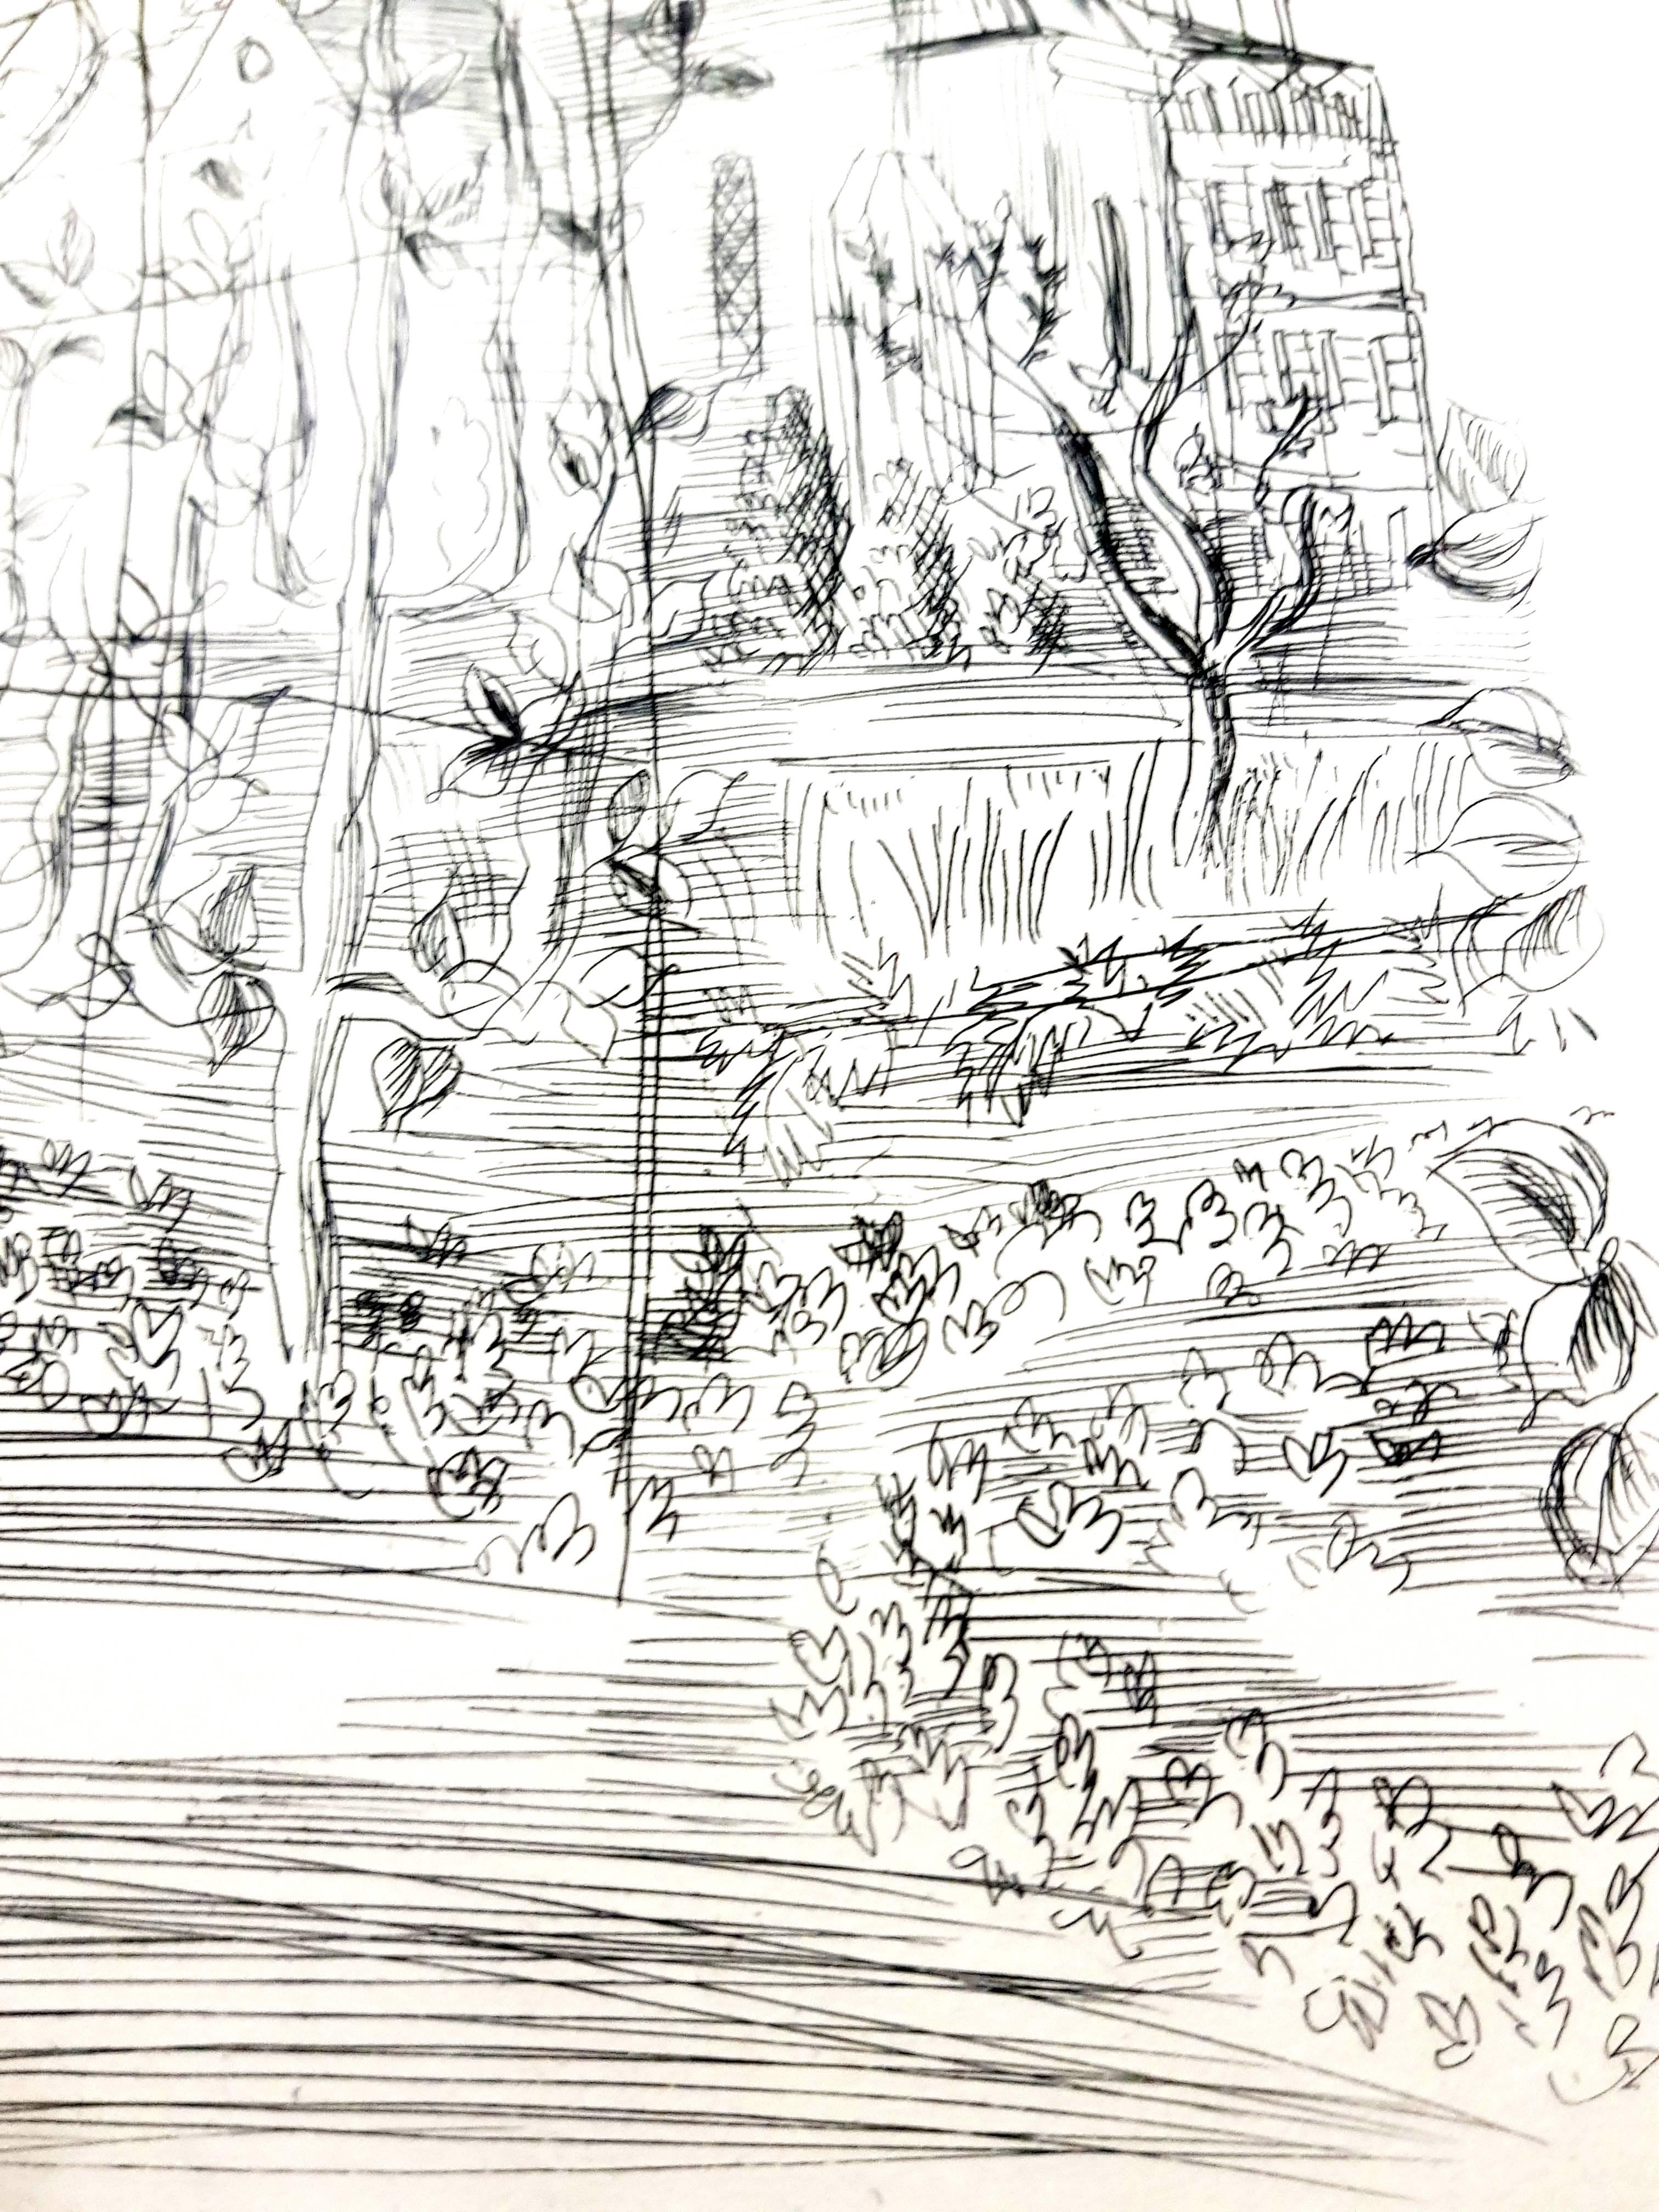 Raoul Dufy - Church - Original Etching
Dimensions: 13 x 10